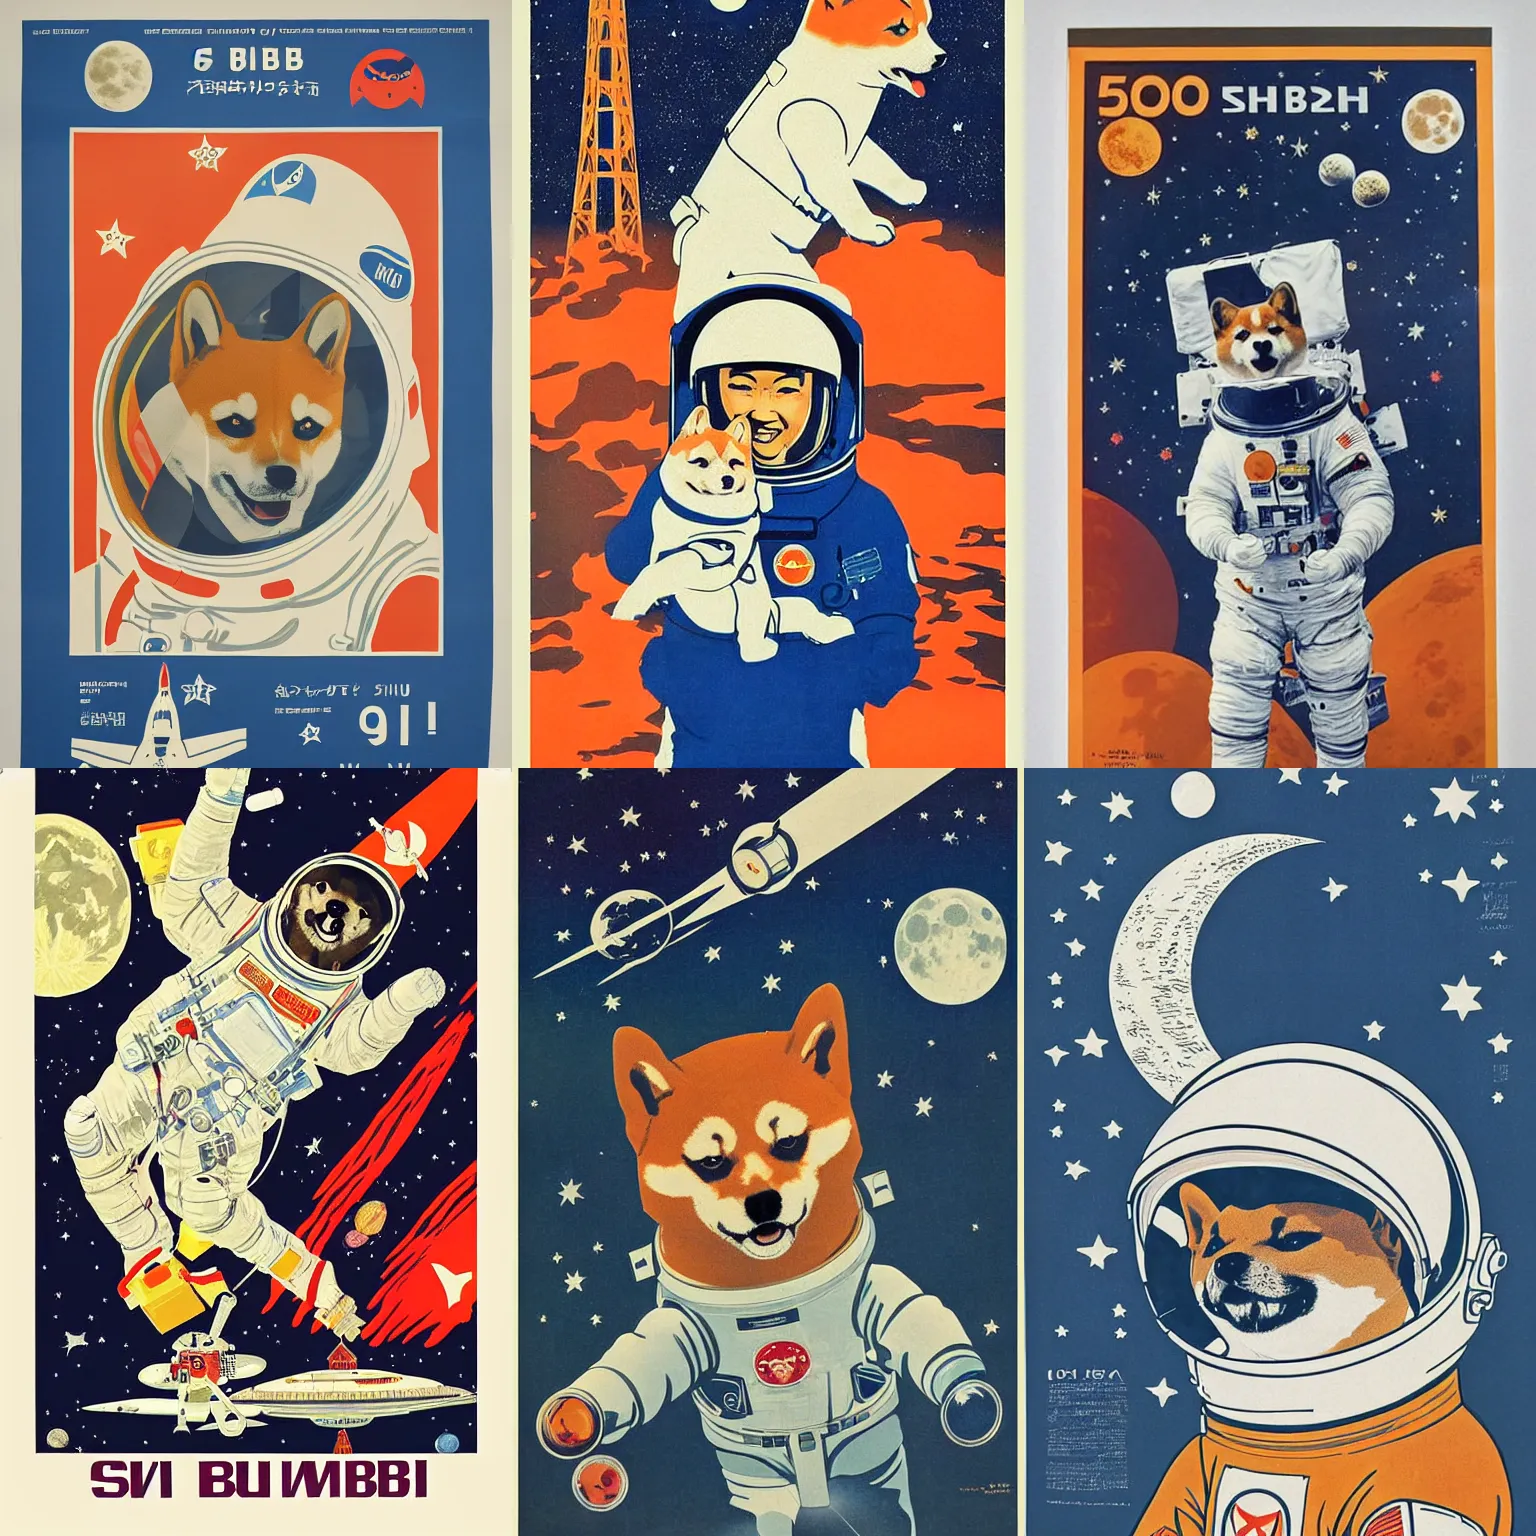 Prompt: Shiba Inu cosmonaut portrait, moon mission, 60s poster, 1968 Soviet